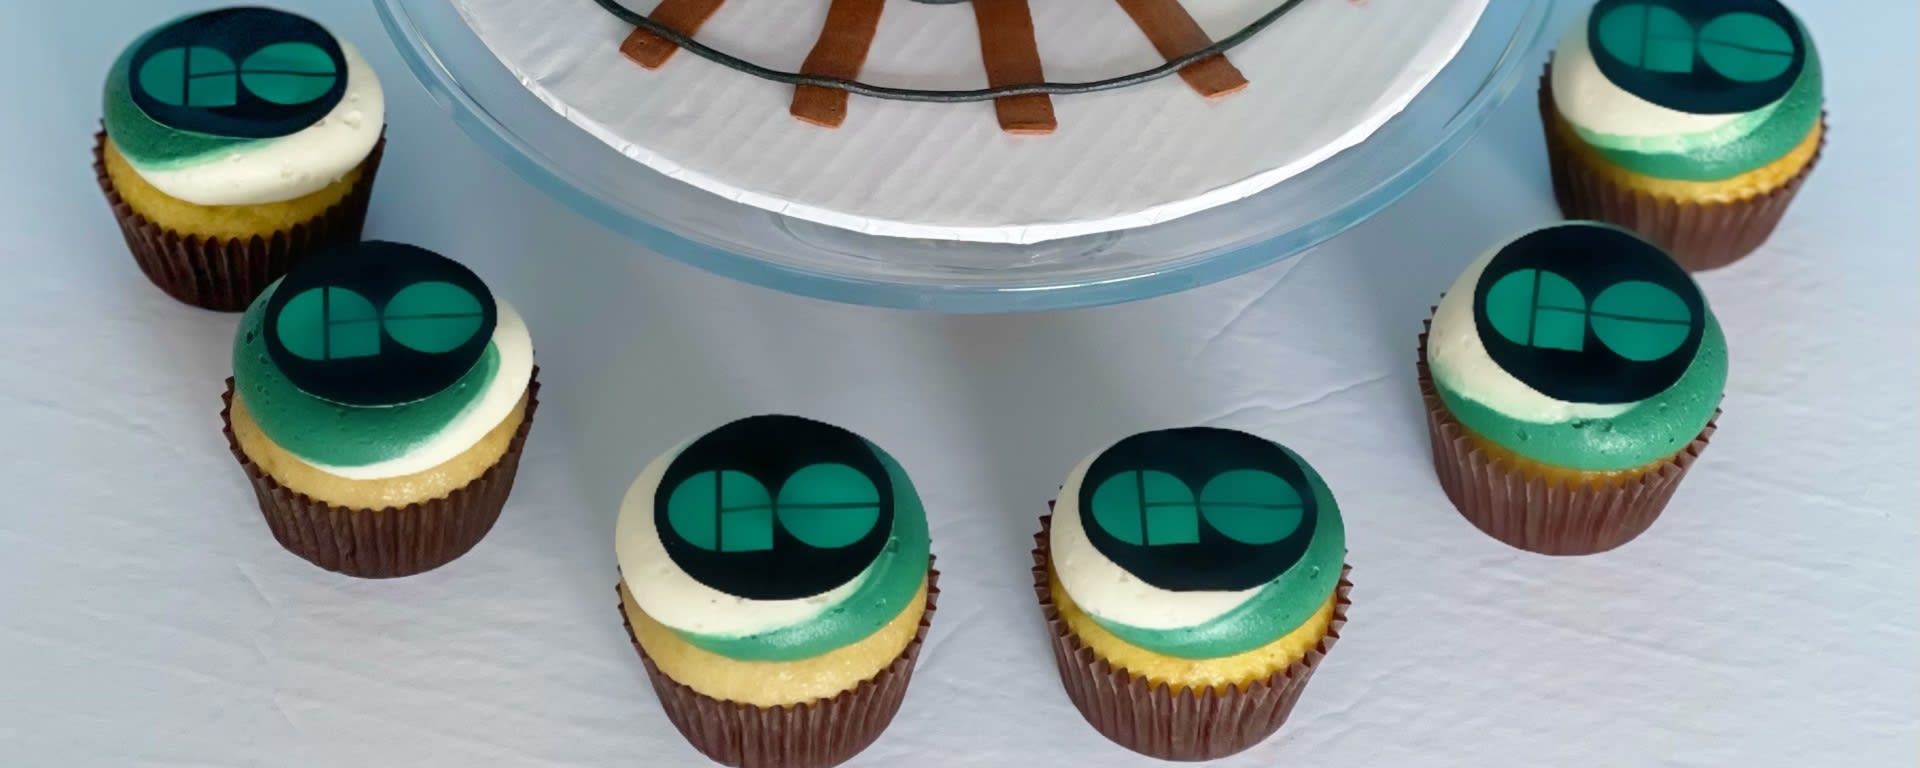 Metrolinx joins GO-themed birthday party